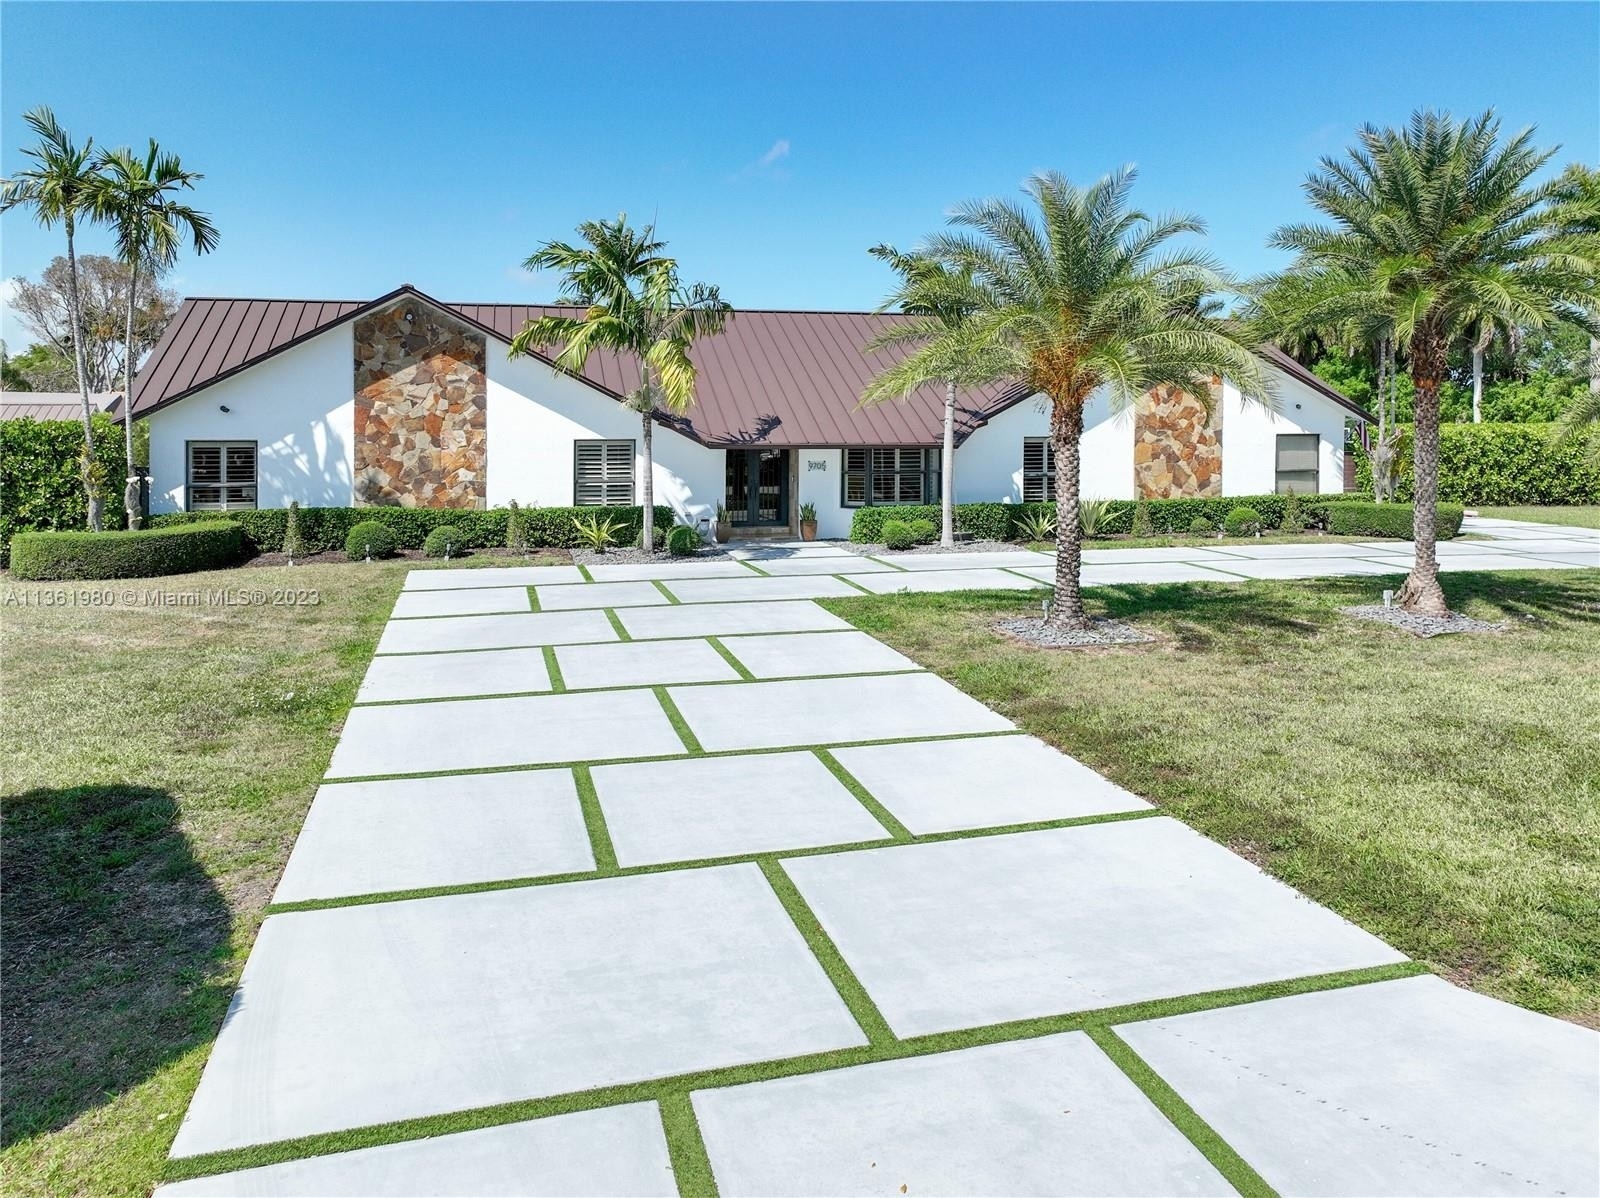 Property at Kendall, Miami, FL 33176